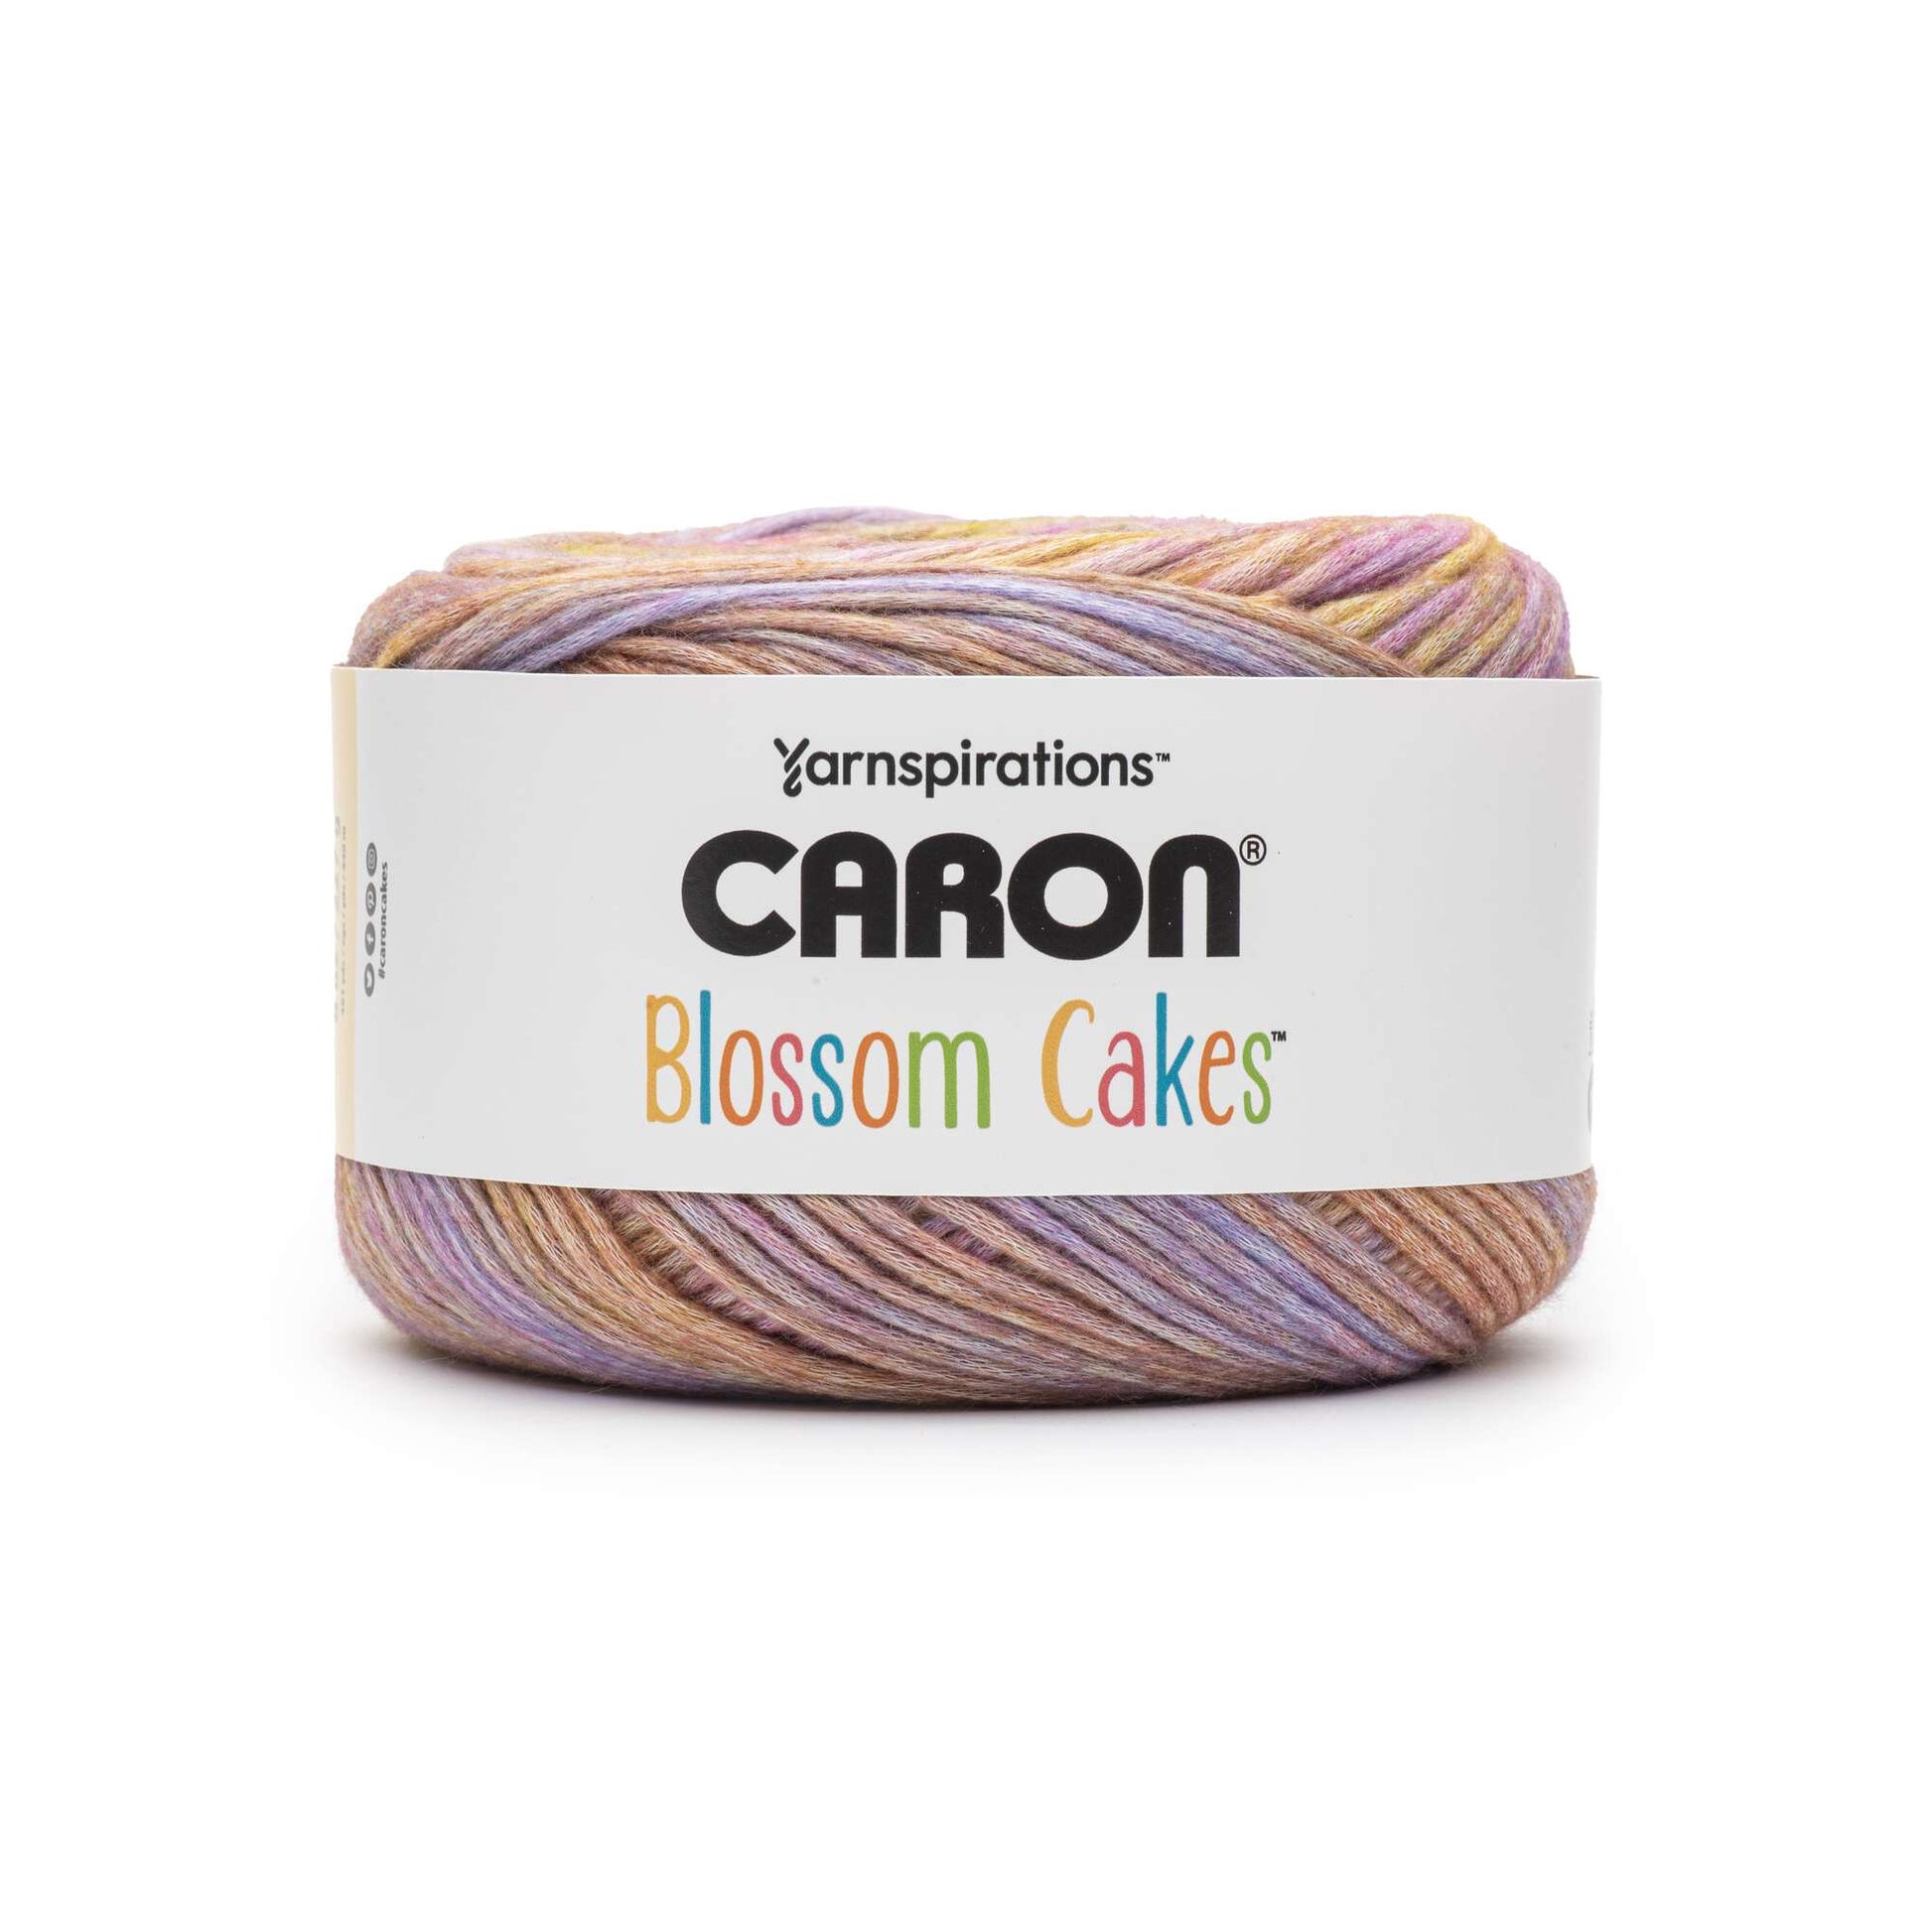 Caron Blossom Cakes Yarn